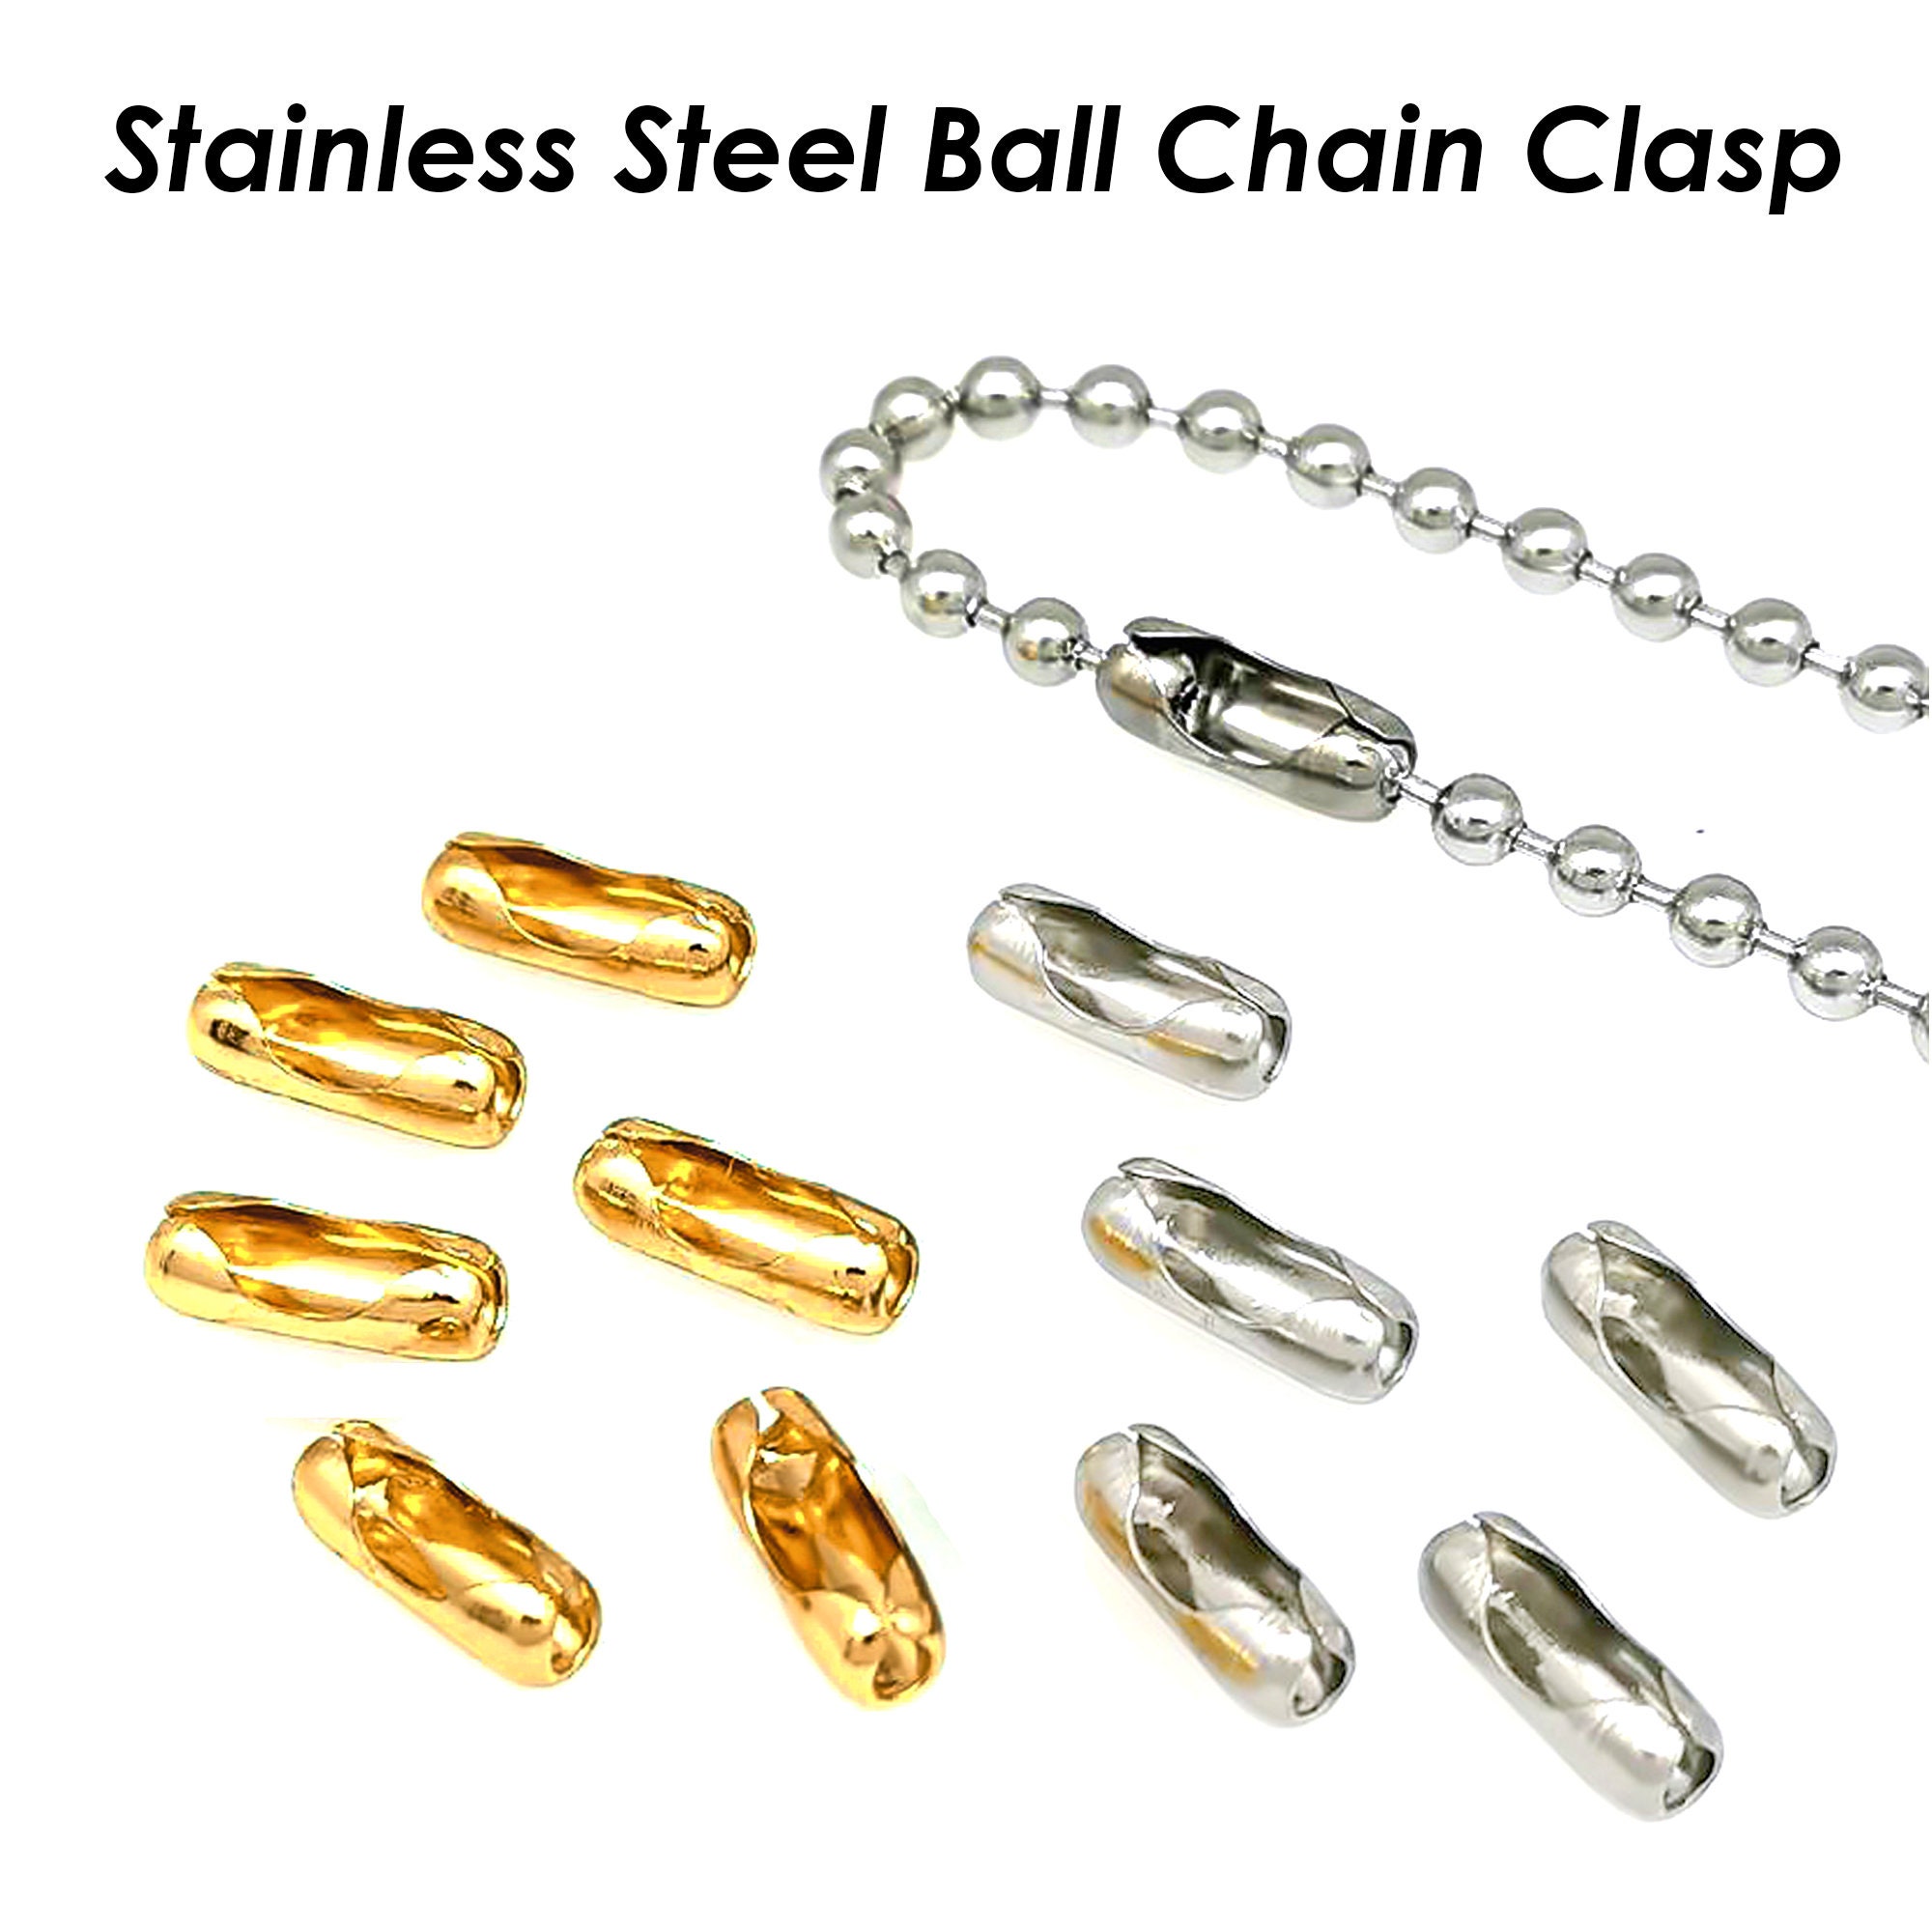 Ball Chain 3 Spool Stainless Steel 100 Feet